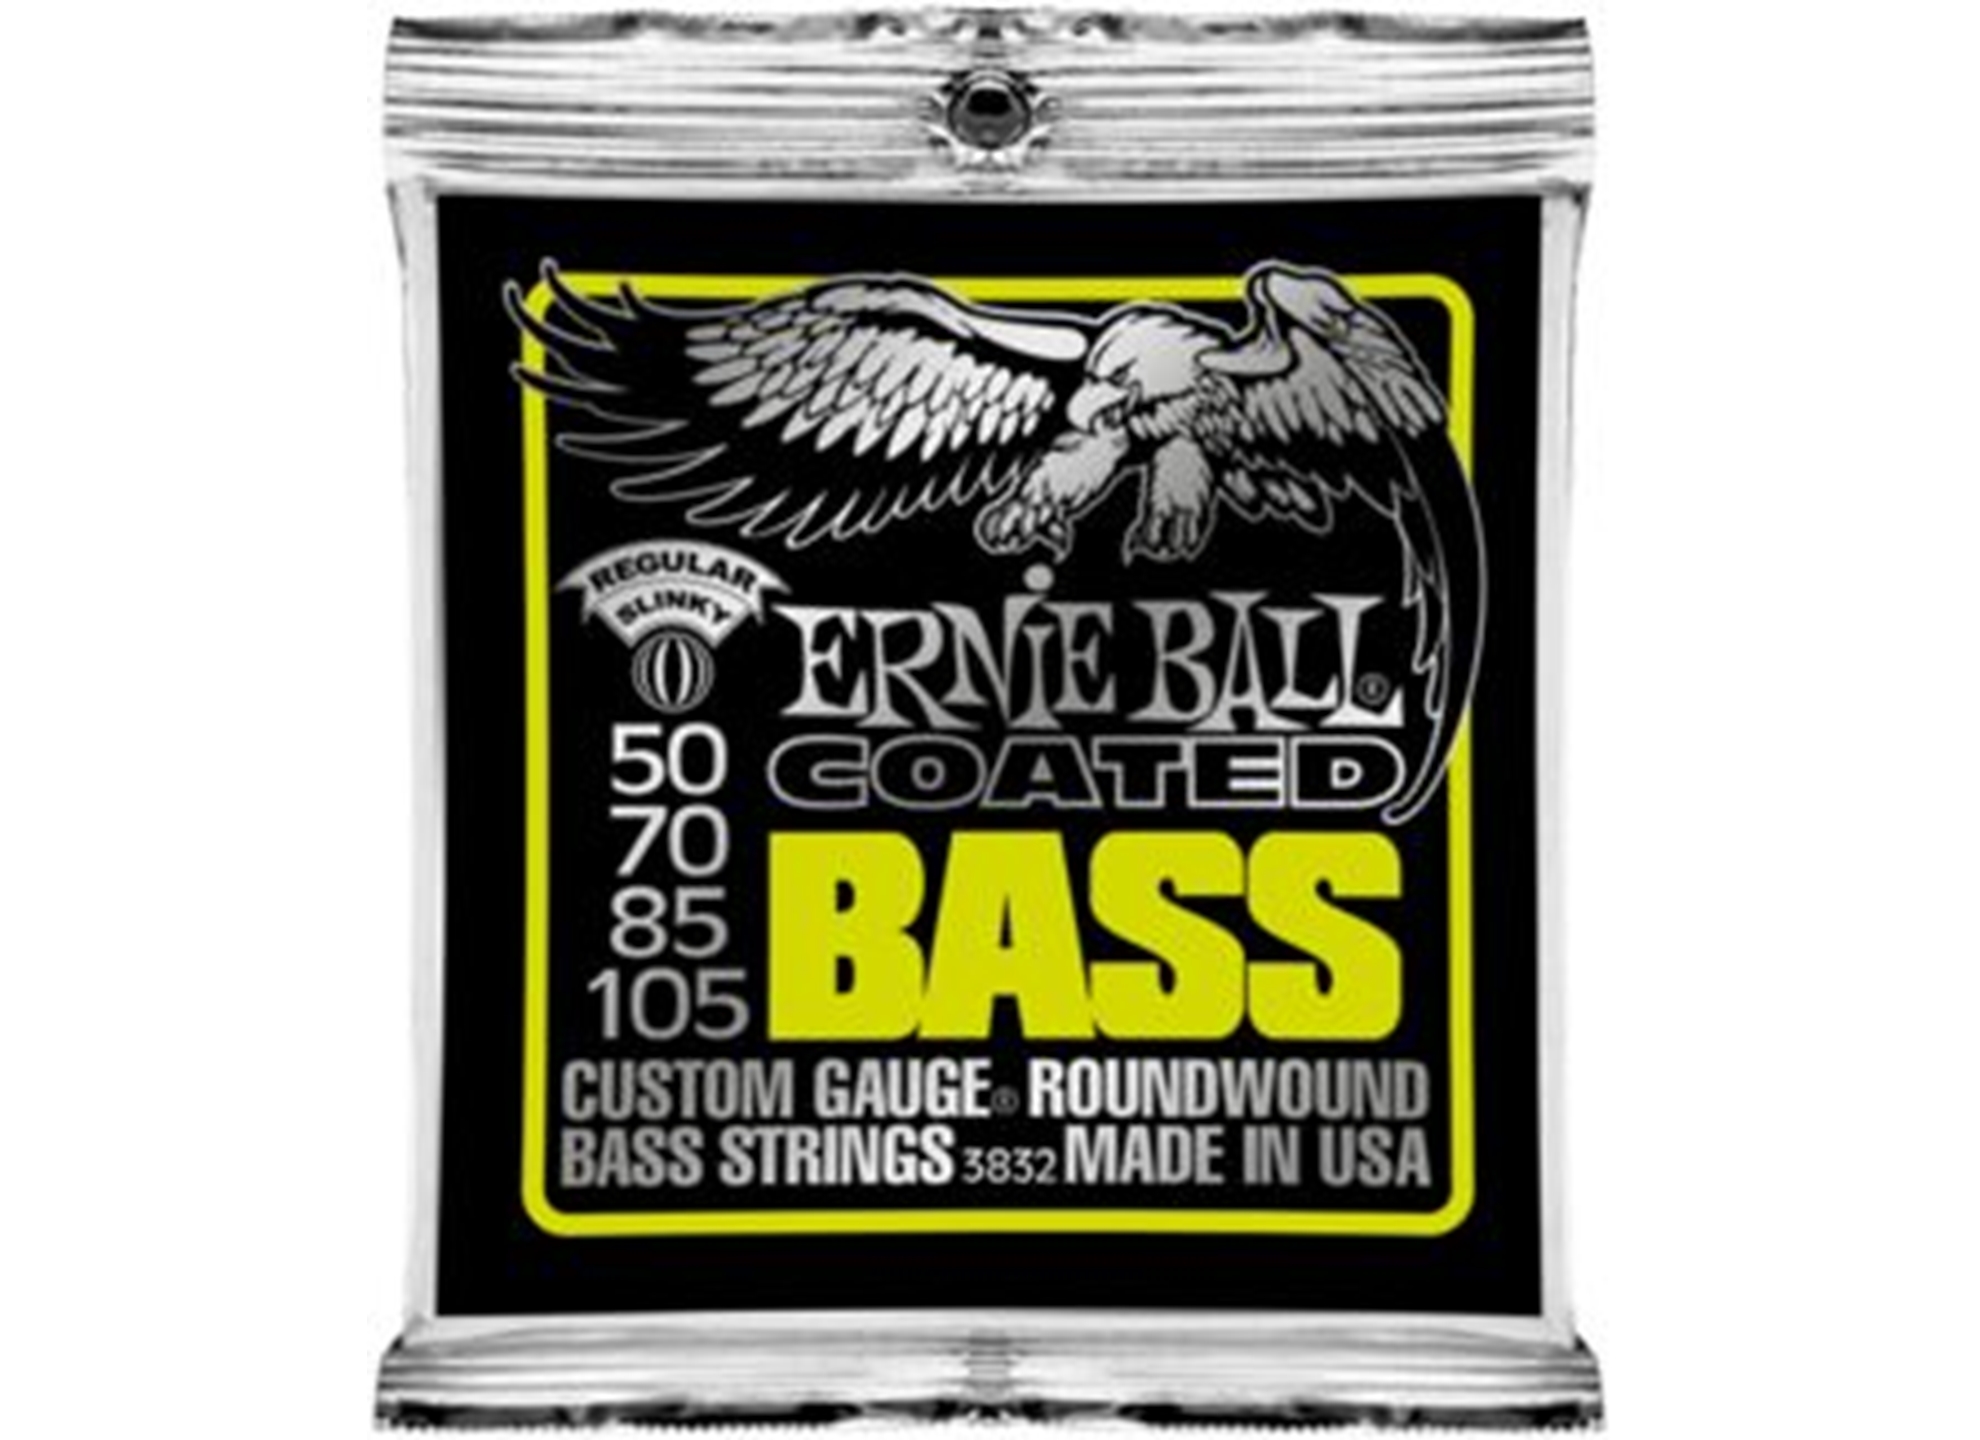 050-105 Regular Slinky Coated Bass Nickel Wound 3832